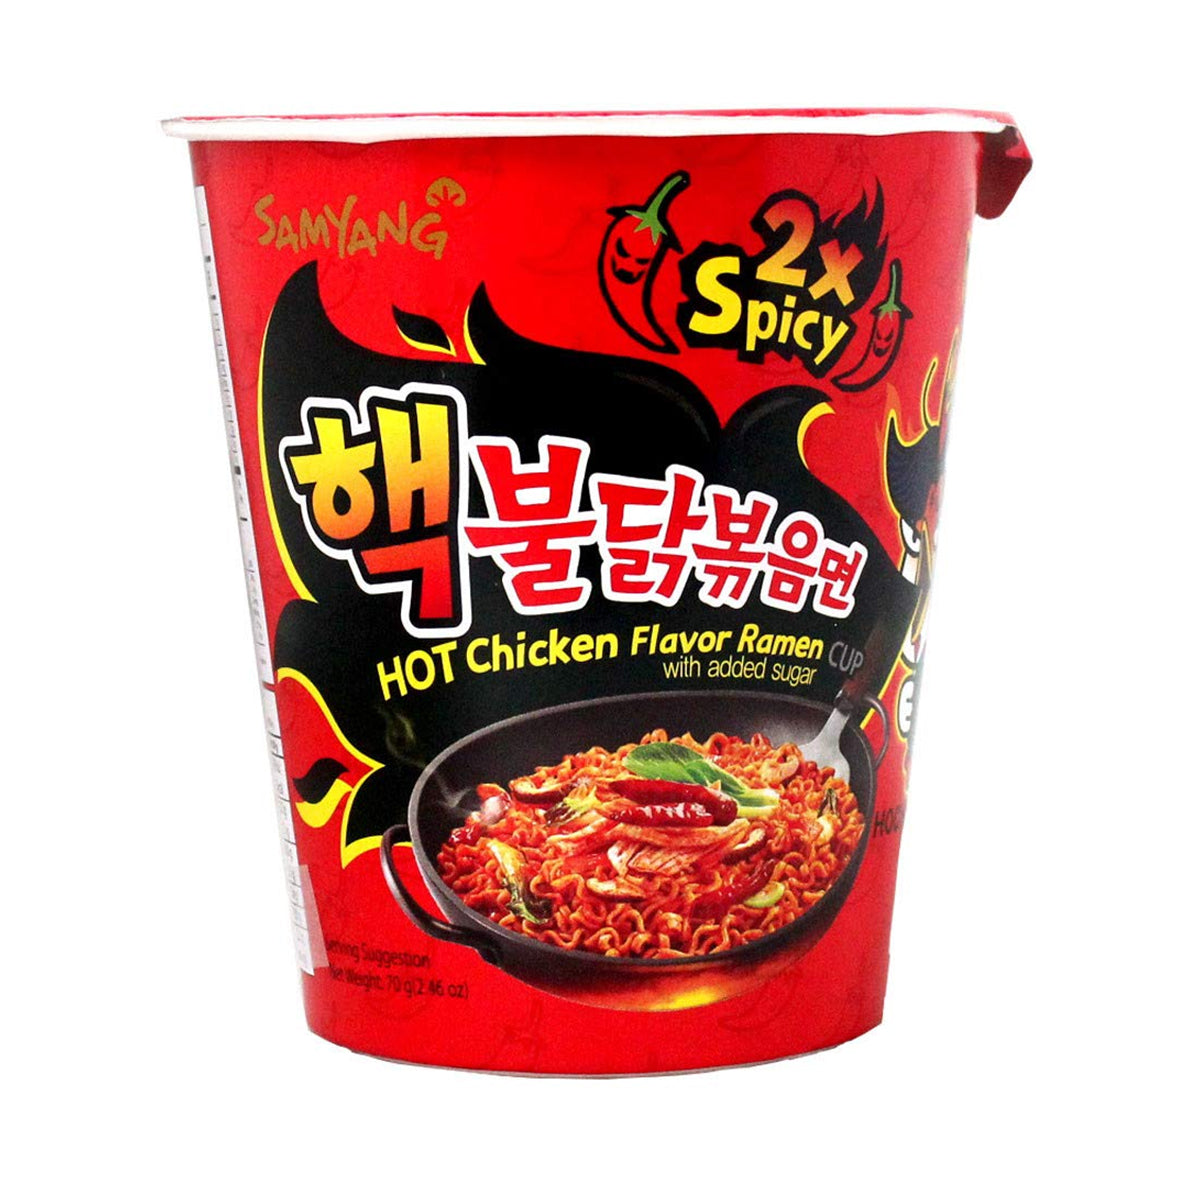 samyang 2x spicy buldak hot chicken flavor ramen (cup) - 70g